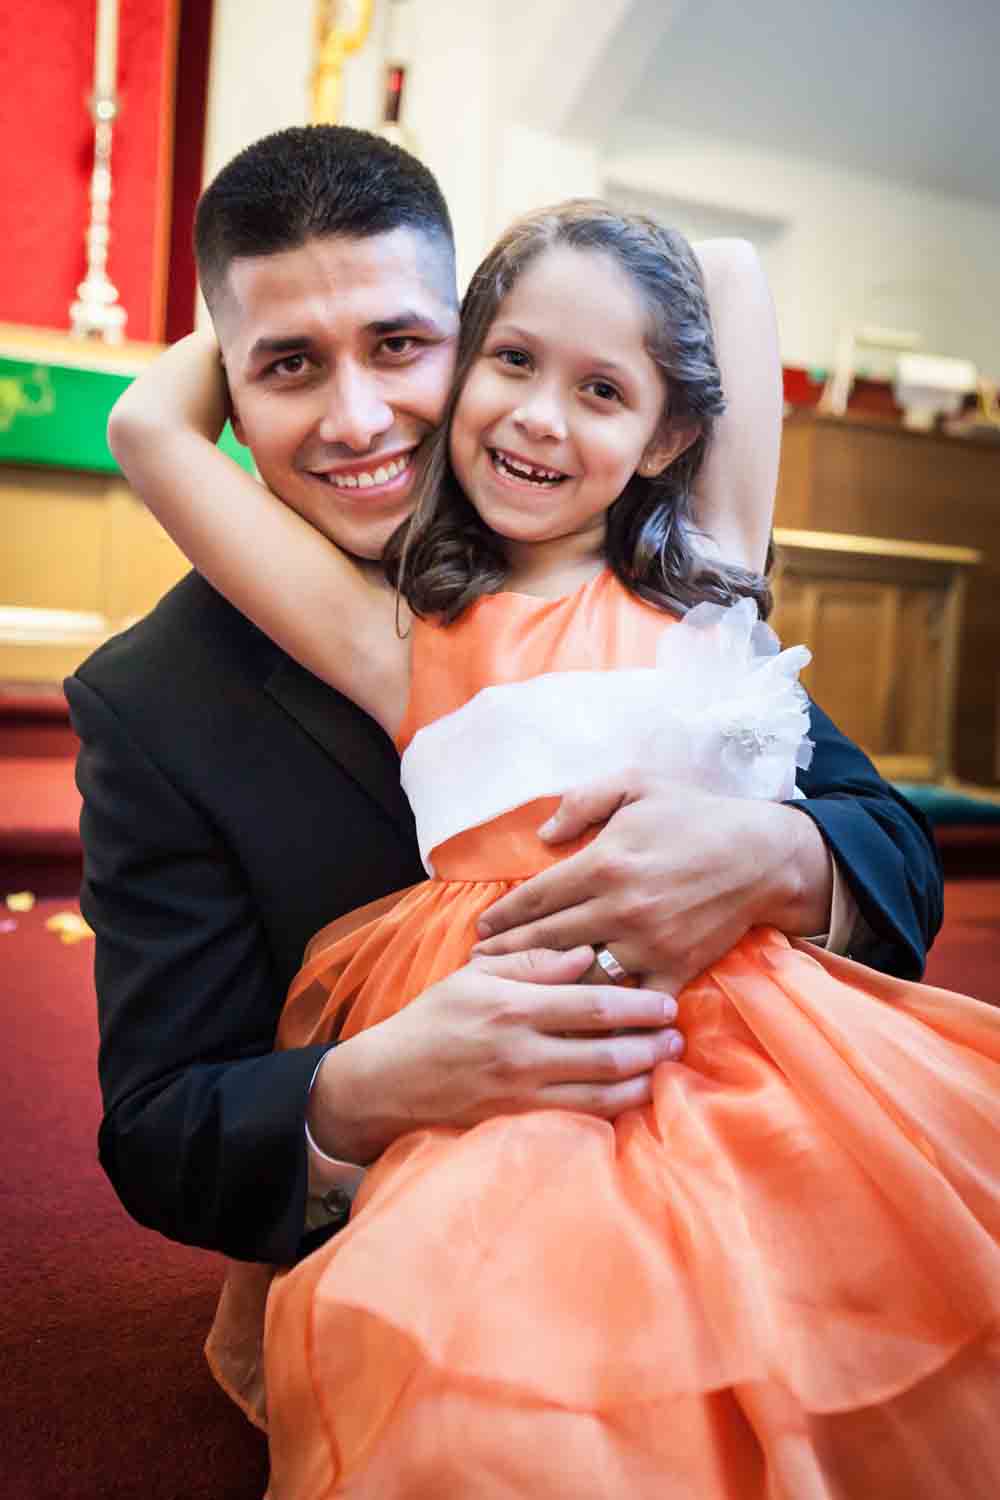 Groom and little girl wearing orange dress smiling